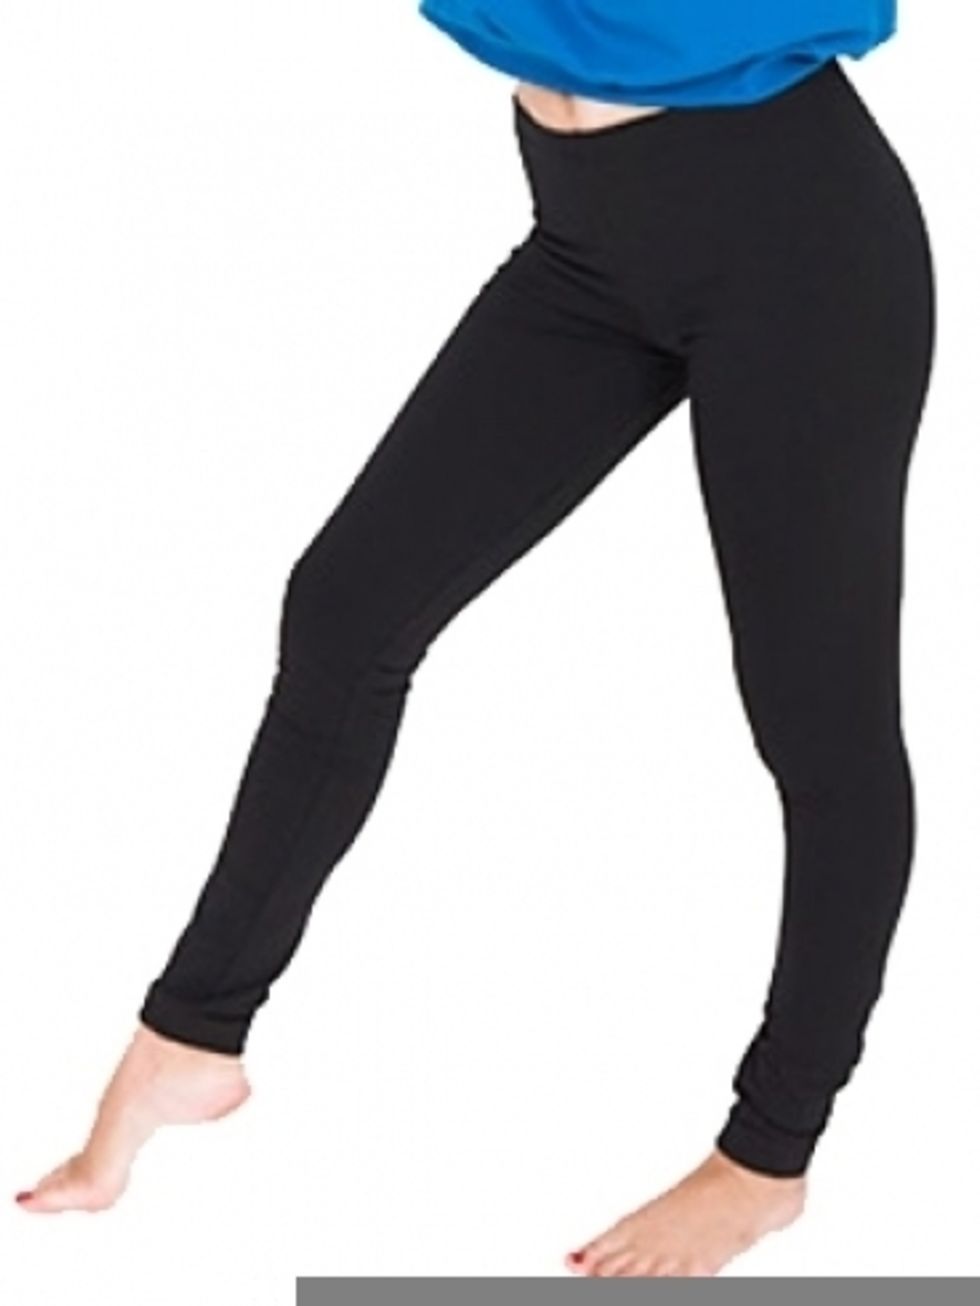 Human leg, Standing, Joint, Active pants, Knee, Elbow, Wrist, Thigh, Waist, yoga pant, 